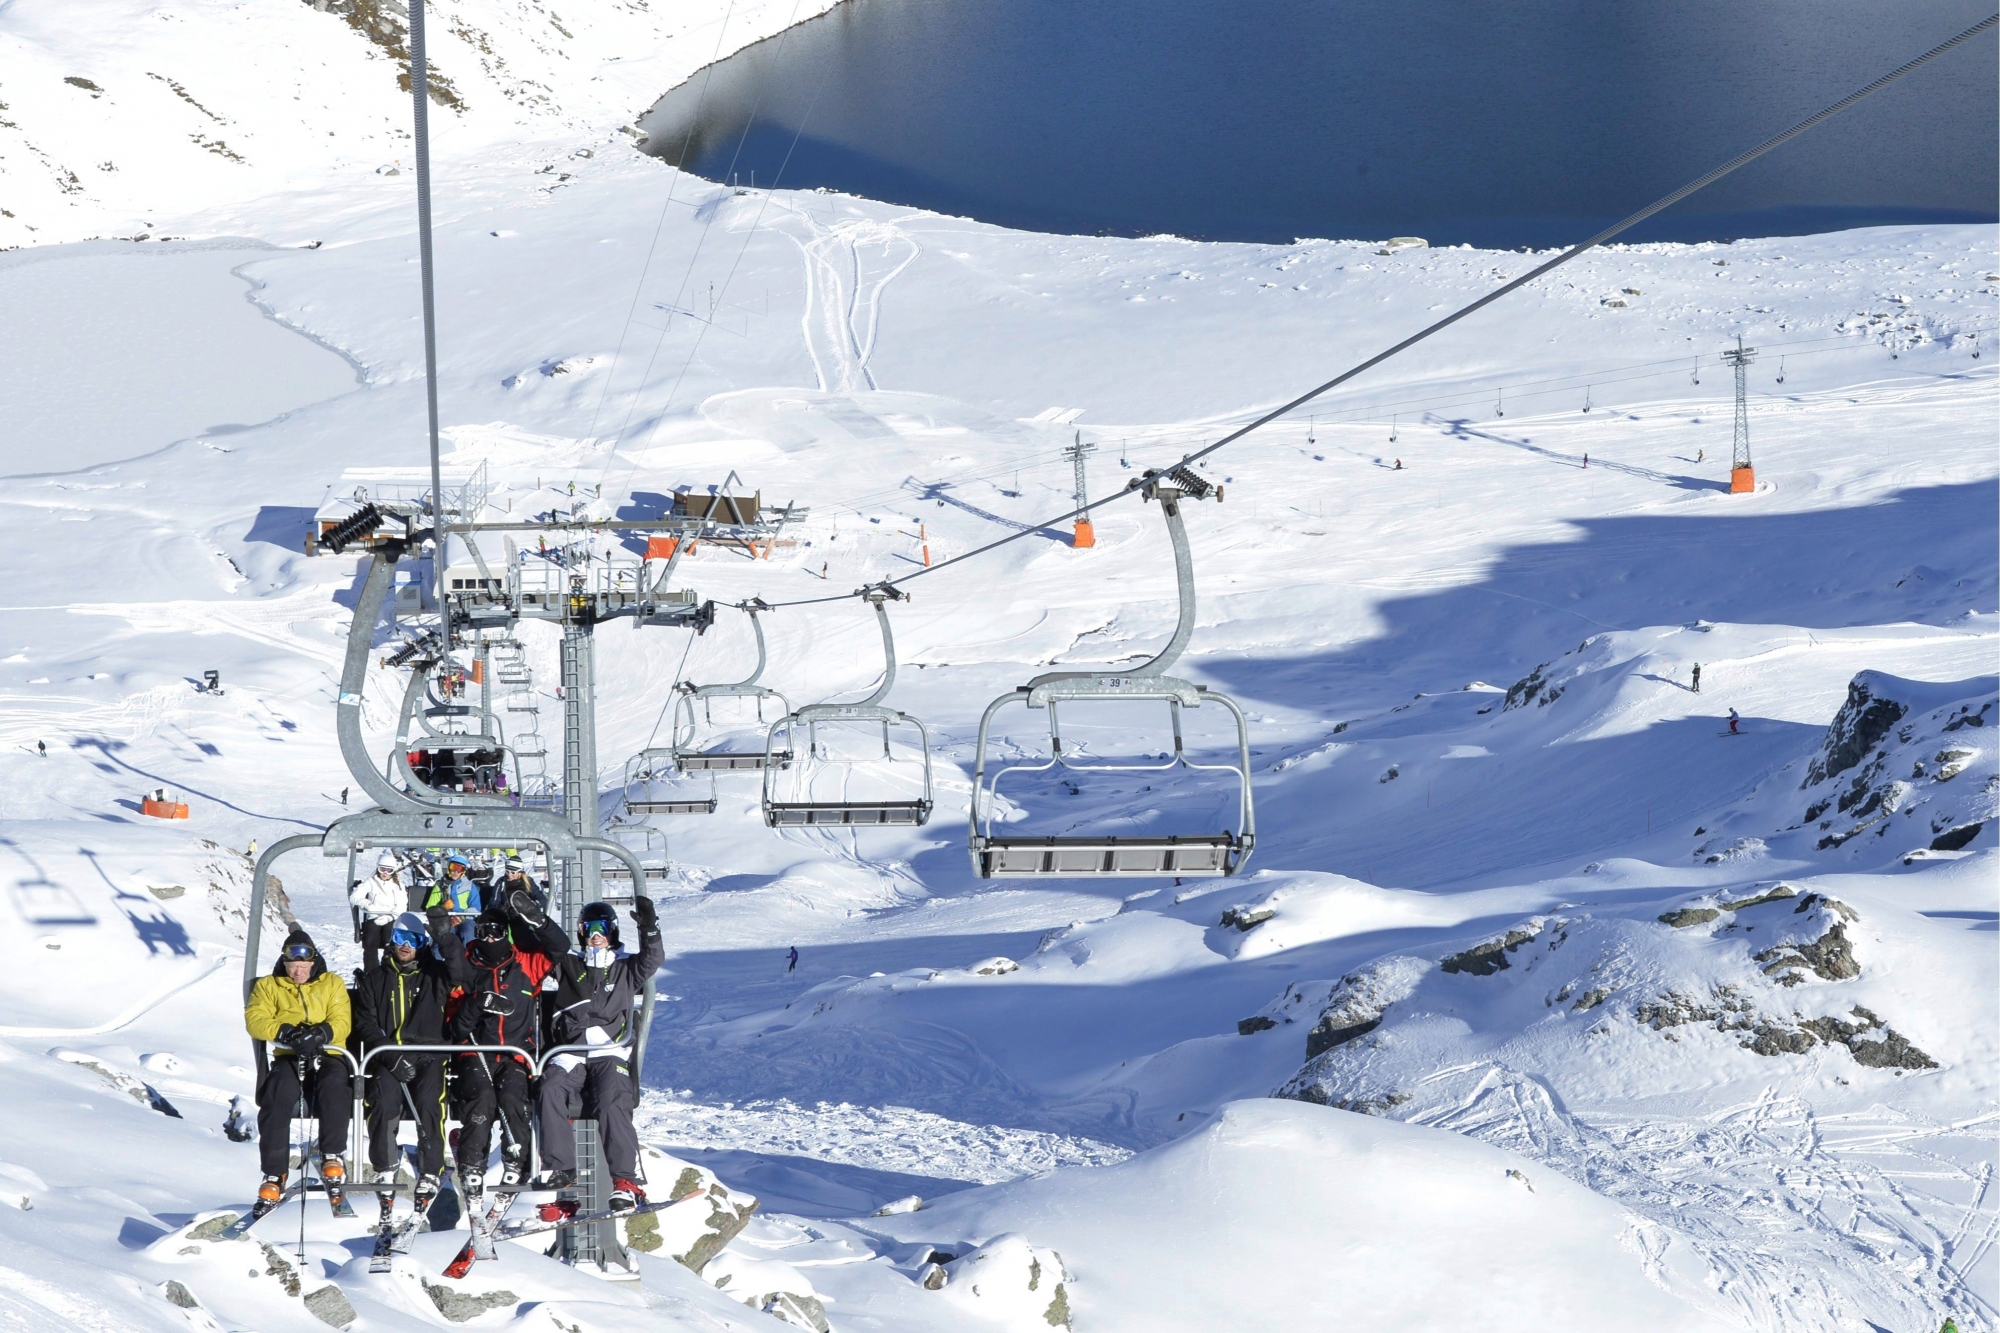 Skiers enjoy the opening season of the ski, in Verbier, Switzerland, Saturday, November 8, 2014. This year Switzerland is celebrating 150 years of winter tourism. (KEYSTONE/Maxime Schmid) SCHWEIZ WINTERSPORT EROEFFNUNG SKISAISON